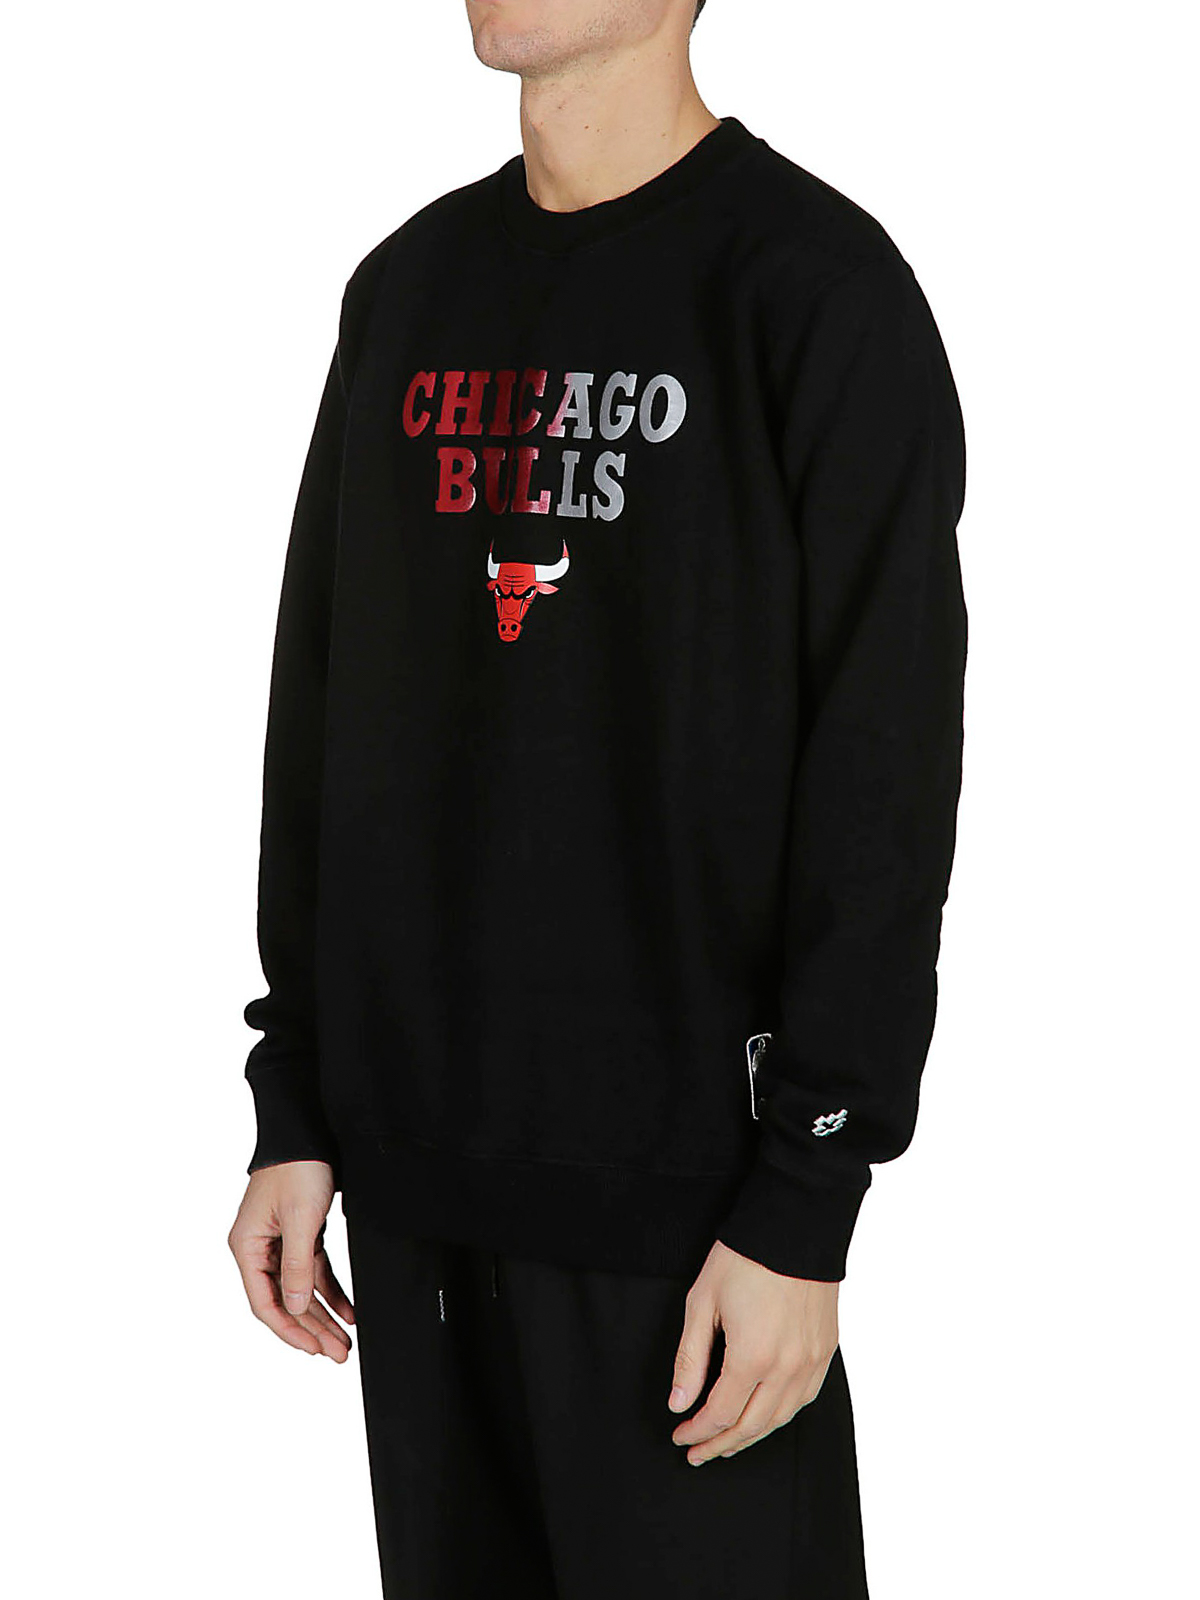 Kleding Herenkleding Hoodies & Sweatshirts Sweatshirts Vtg 90' CHICAGO BULLS NBA Michael Jordan Borduurwerk Sweatshirt Trui Trui Kampioenschap 